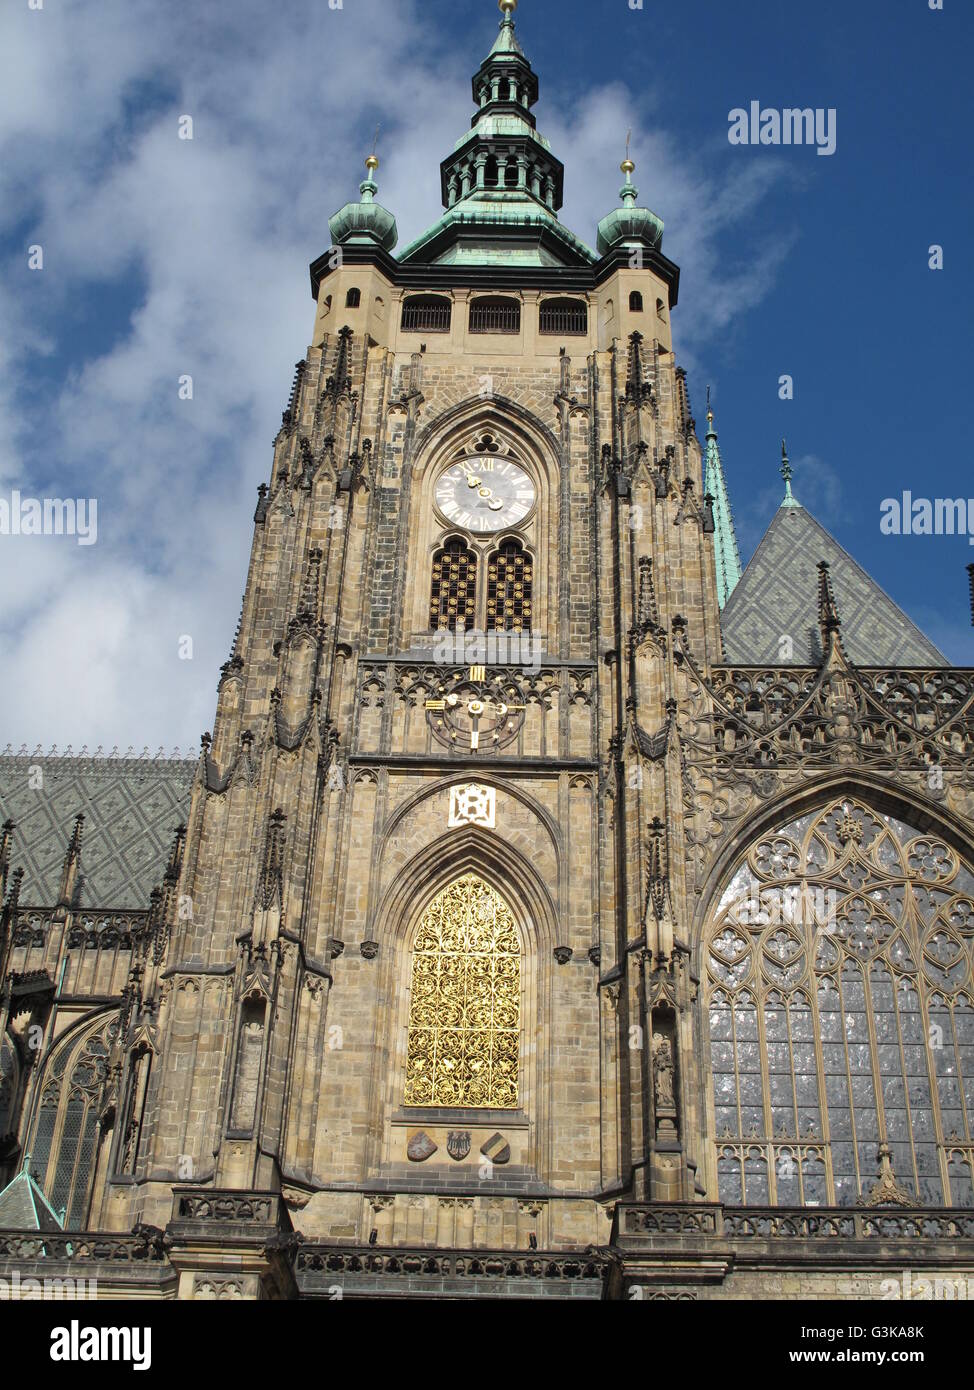 St. Vitus Cathedral, Prague Castle, Baroque architecture, Gothic architectural showcase, front view, UNESCO World Heritage Site Stock Photo